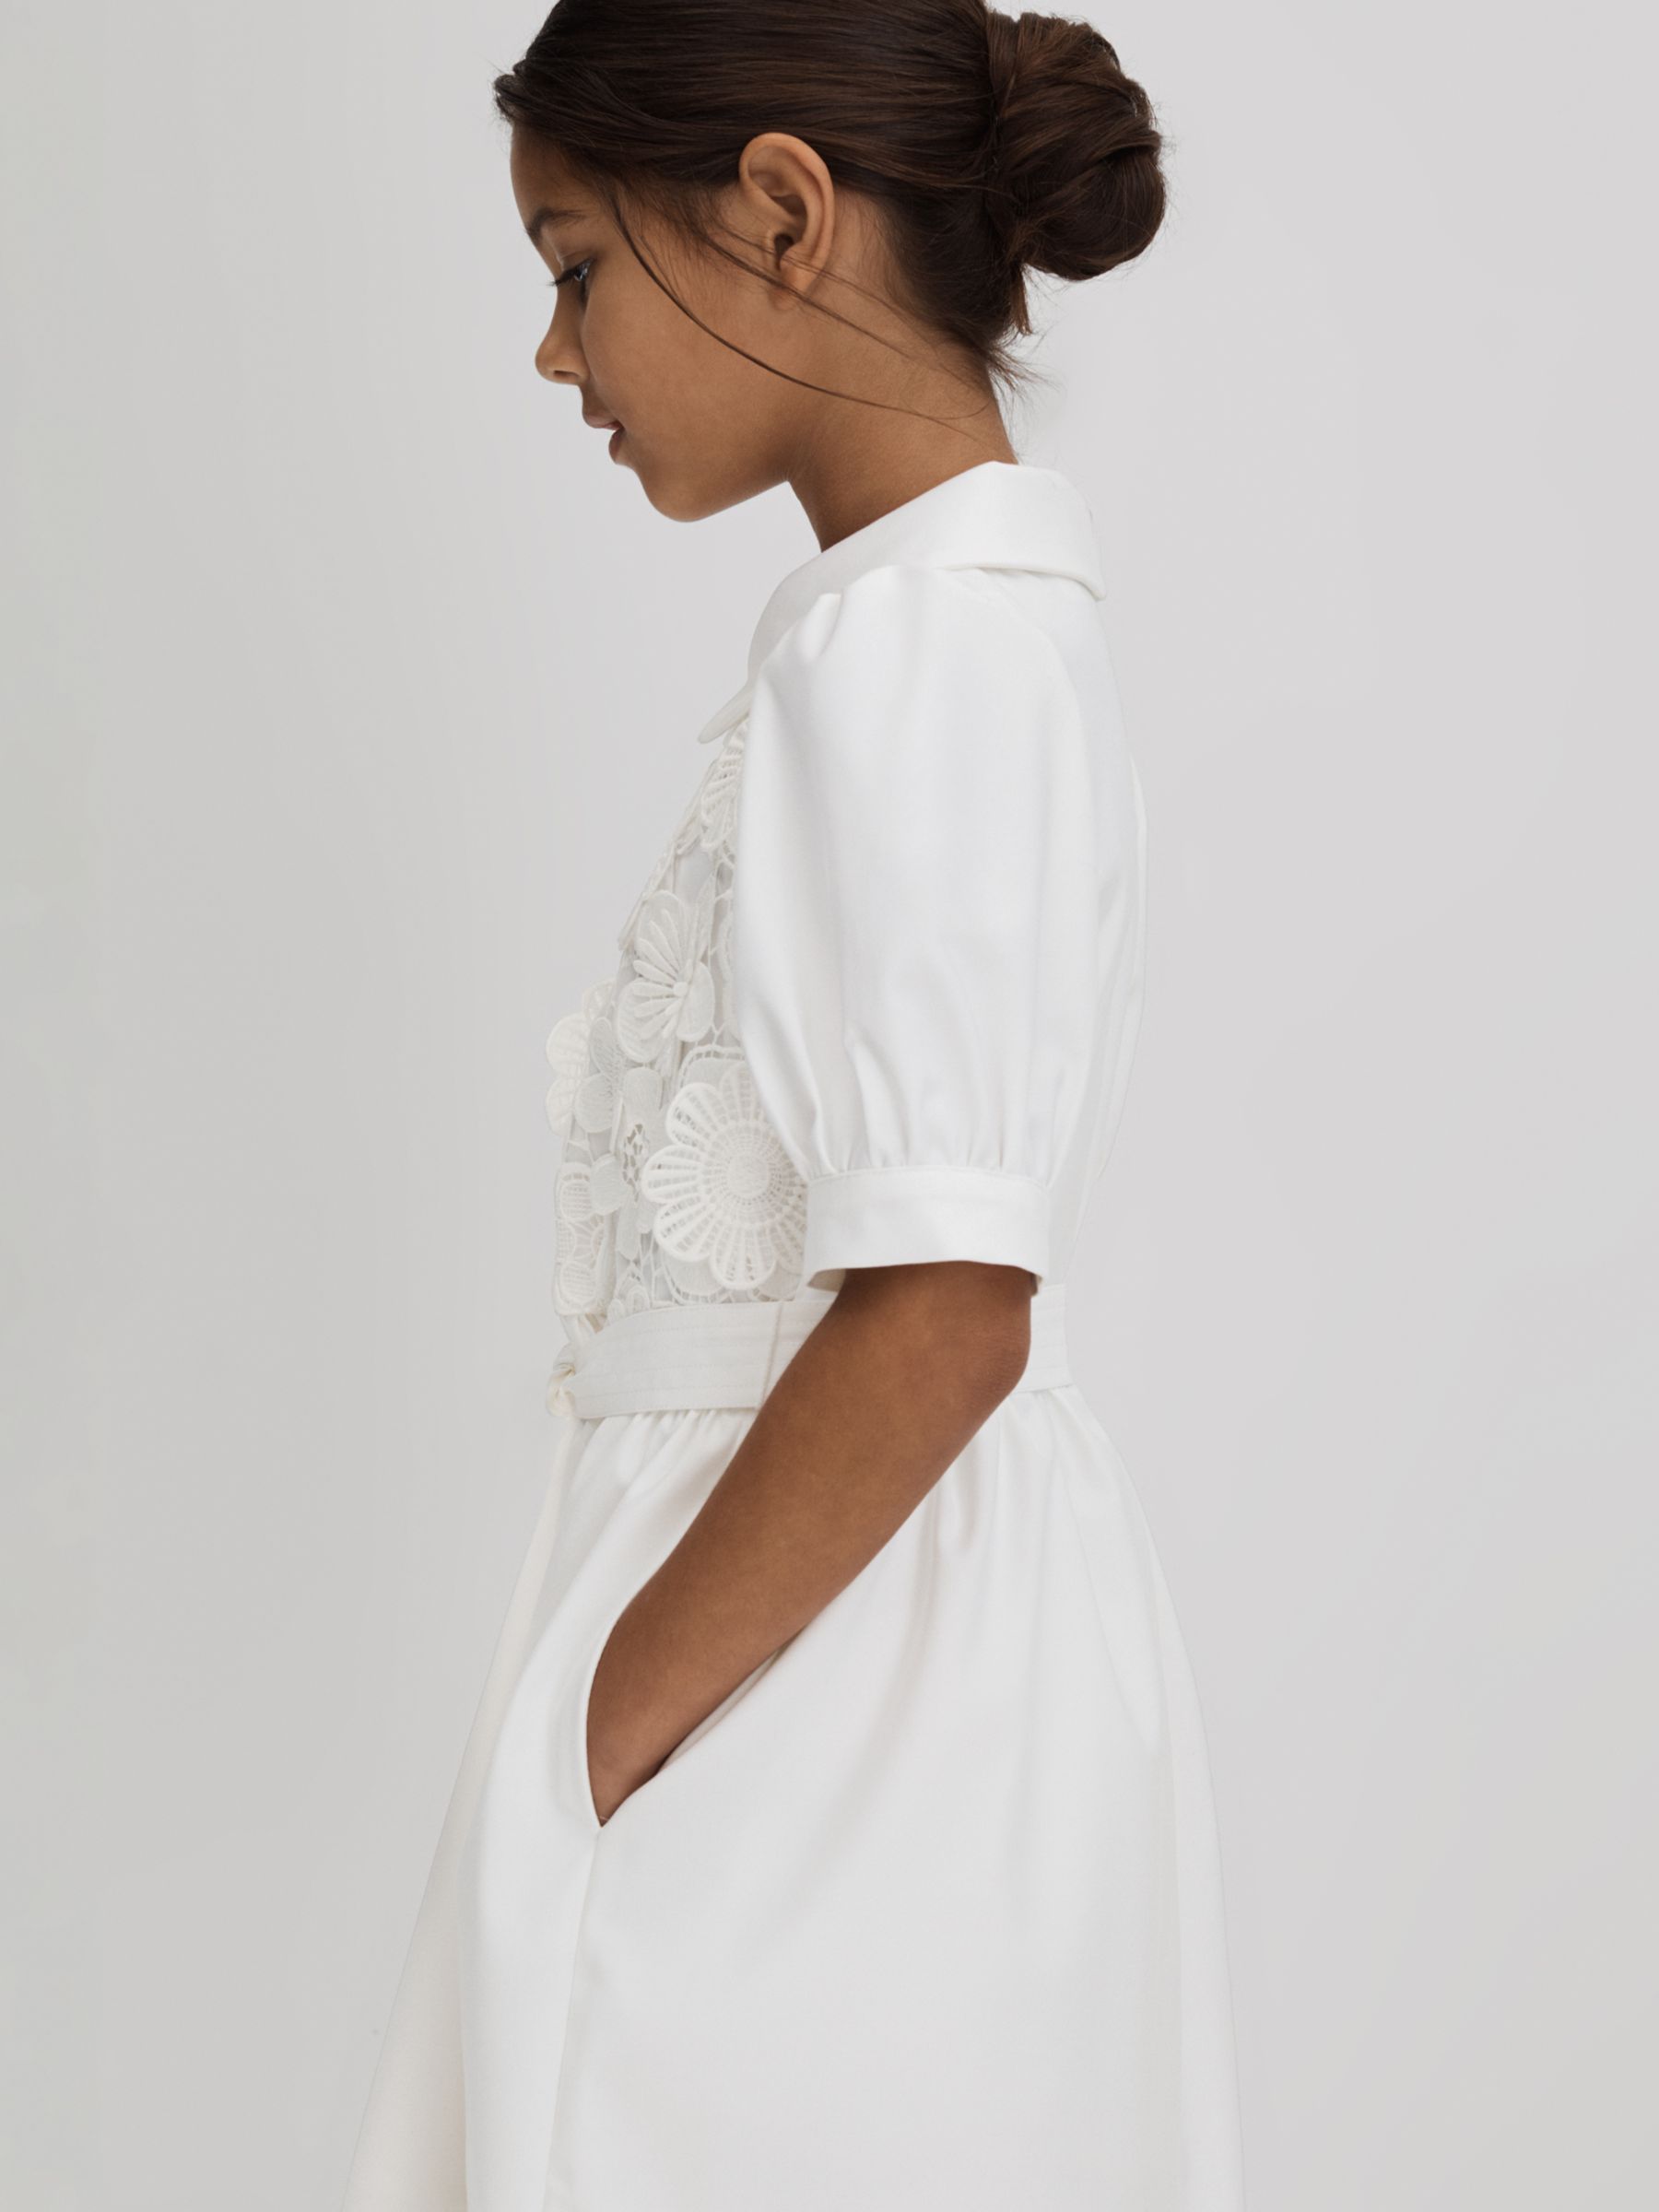 Buy Reiss Kids' Dannie Floral Embroidered Collard Dress, White Online at johnlewis.com